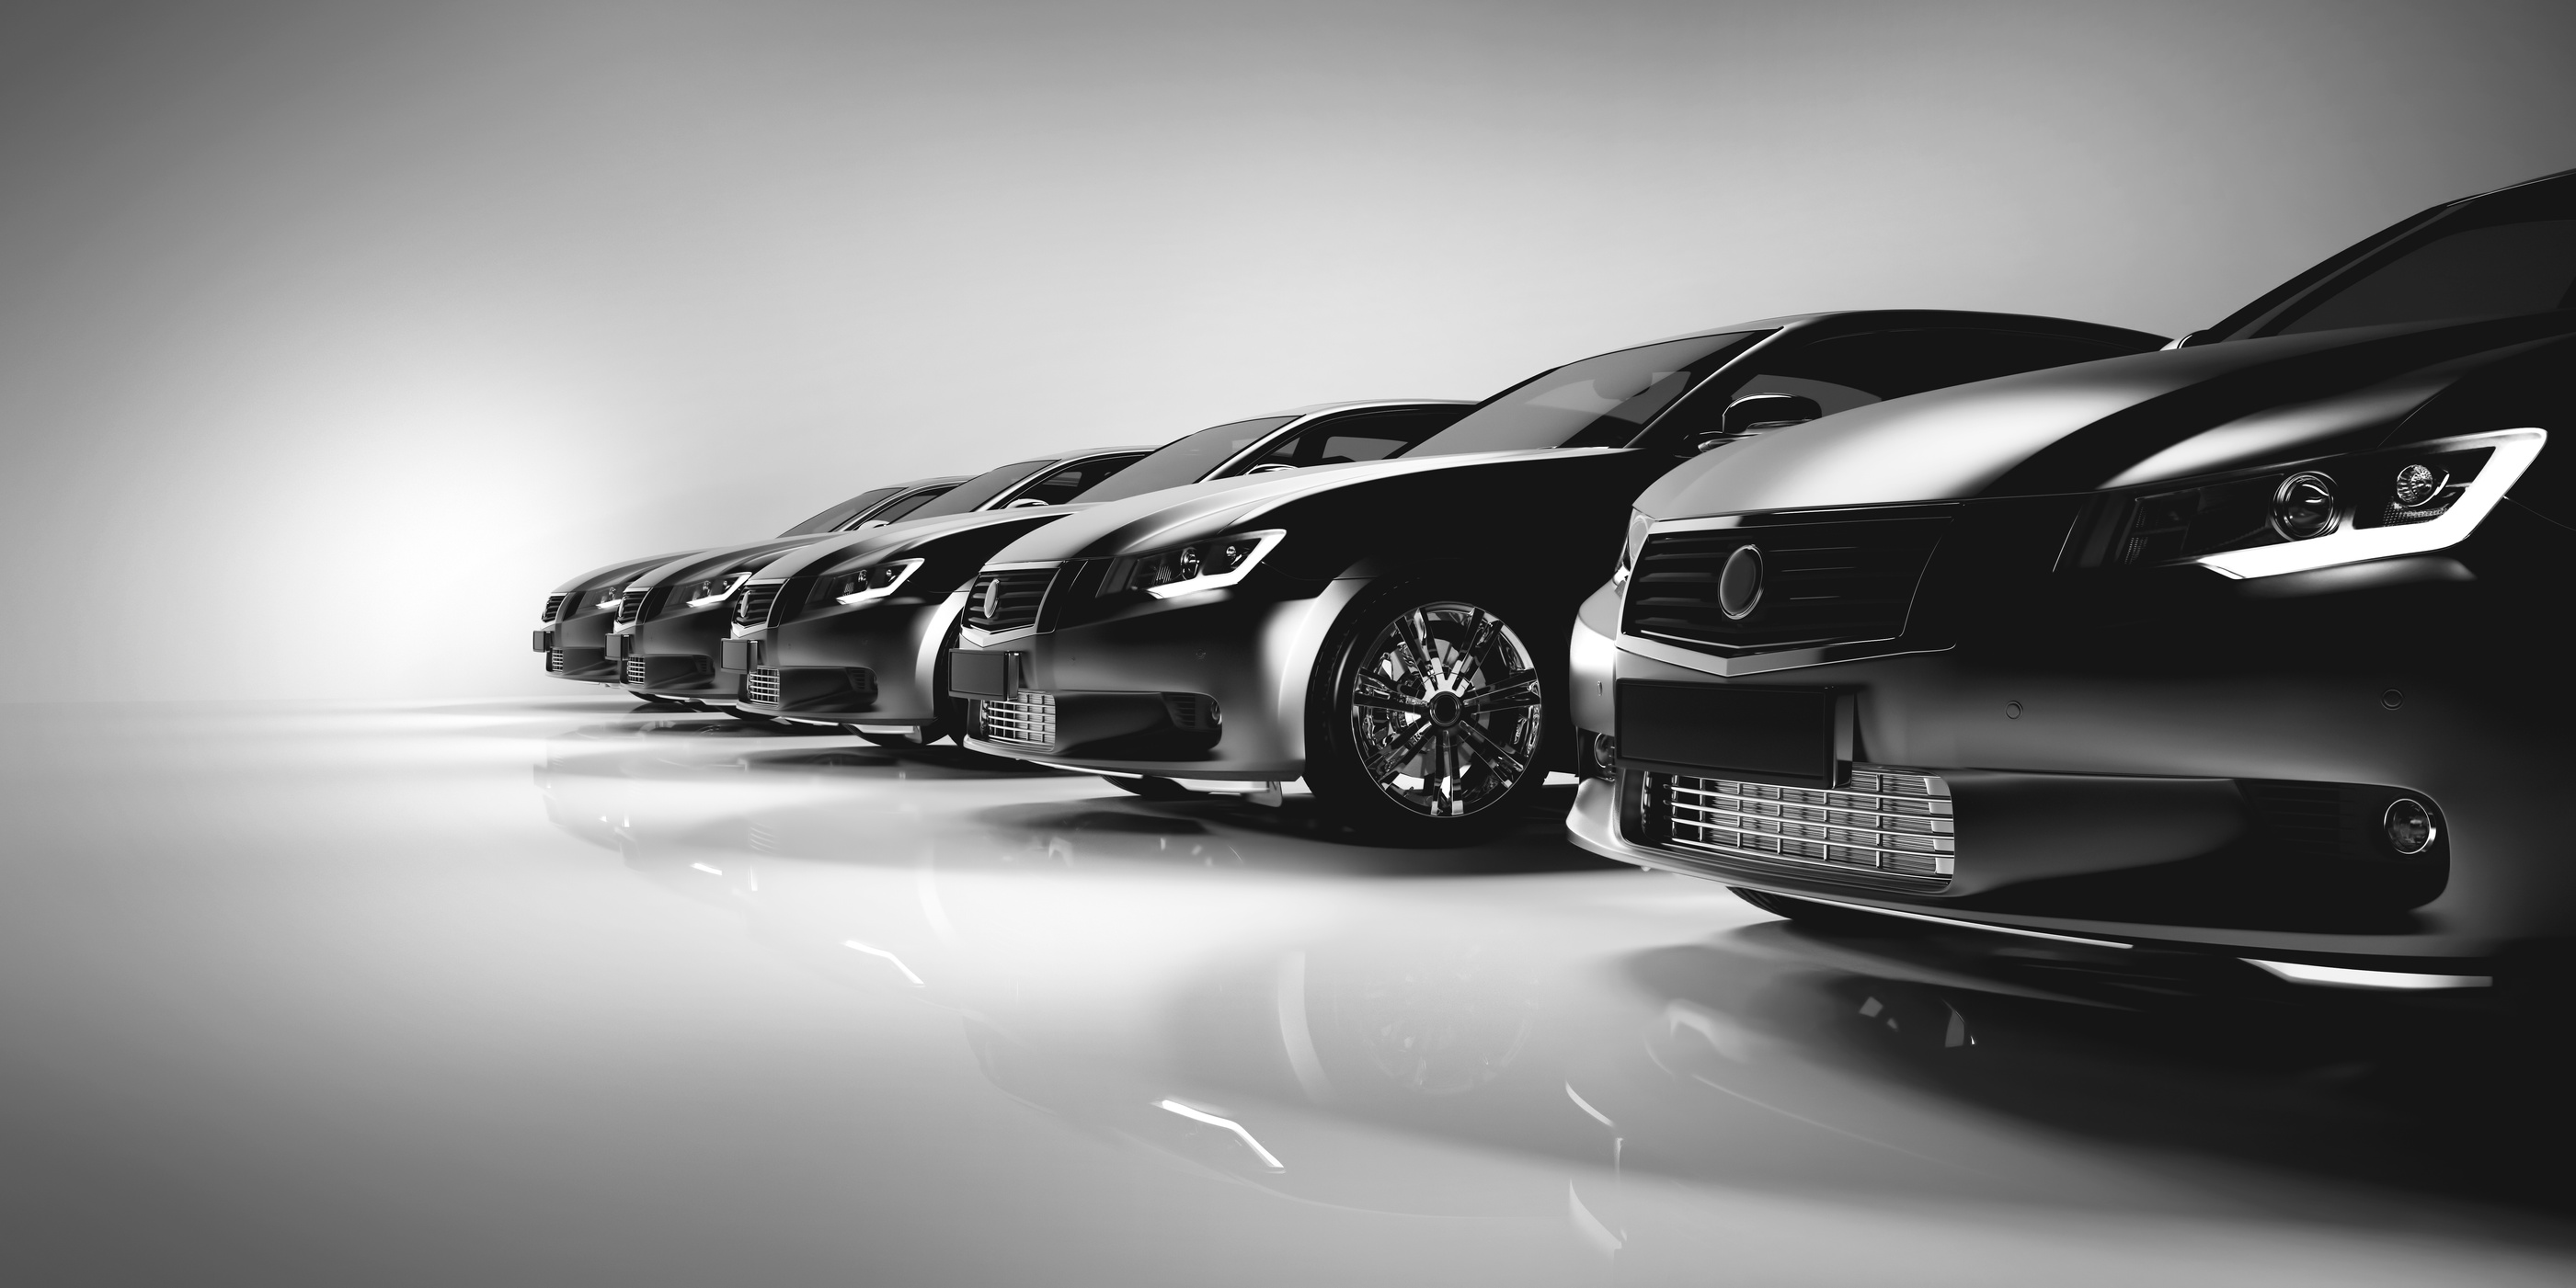 Black Sedan Cars Standing in a Row.